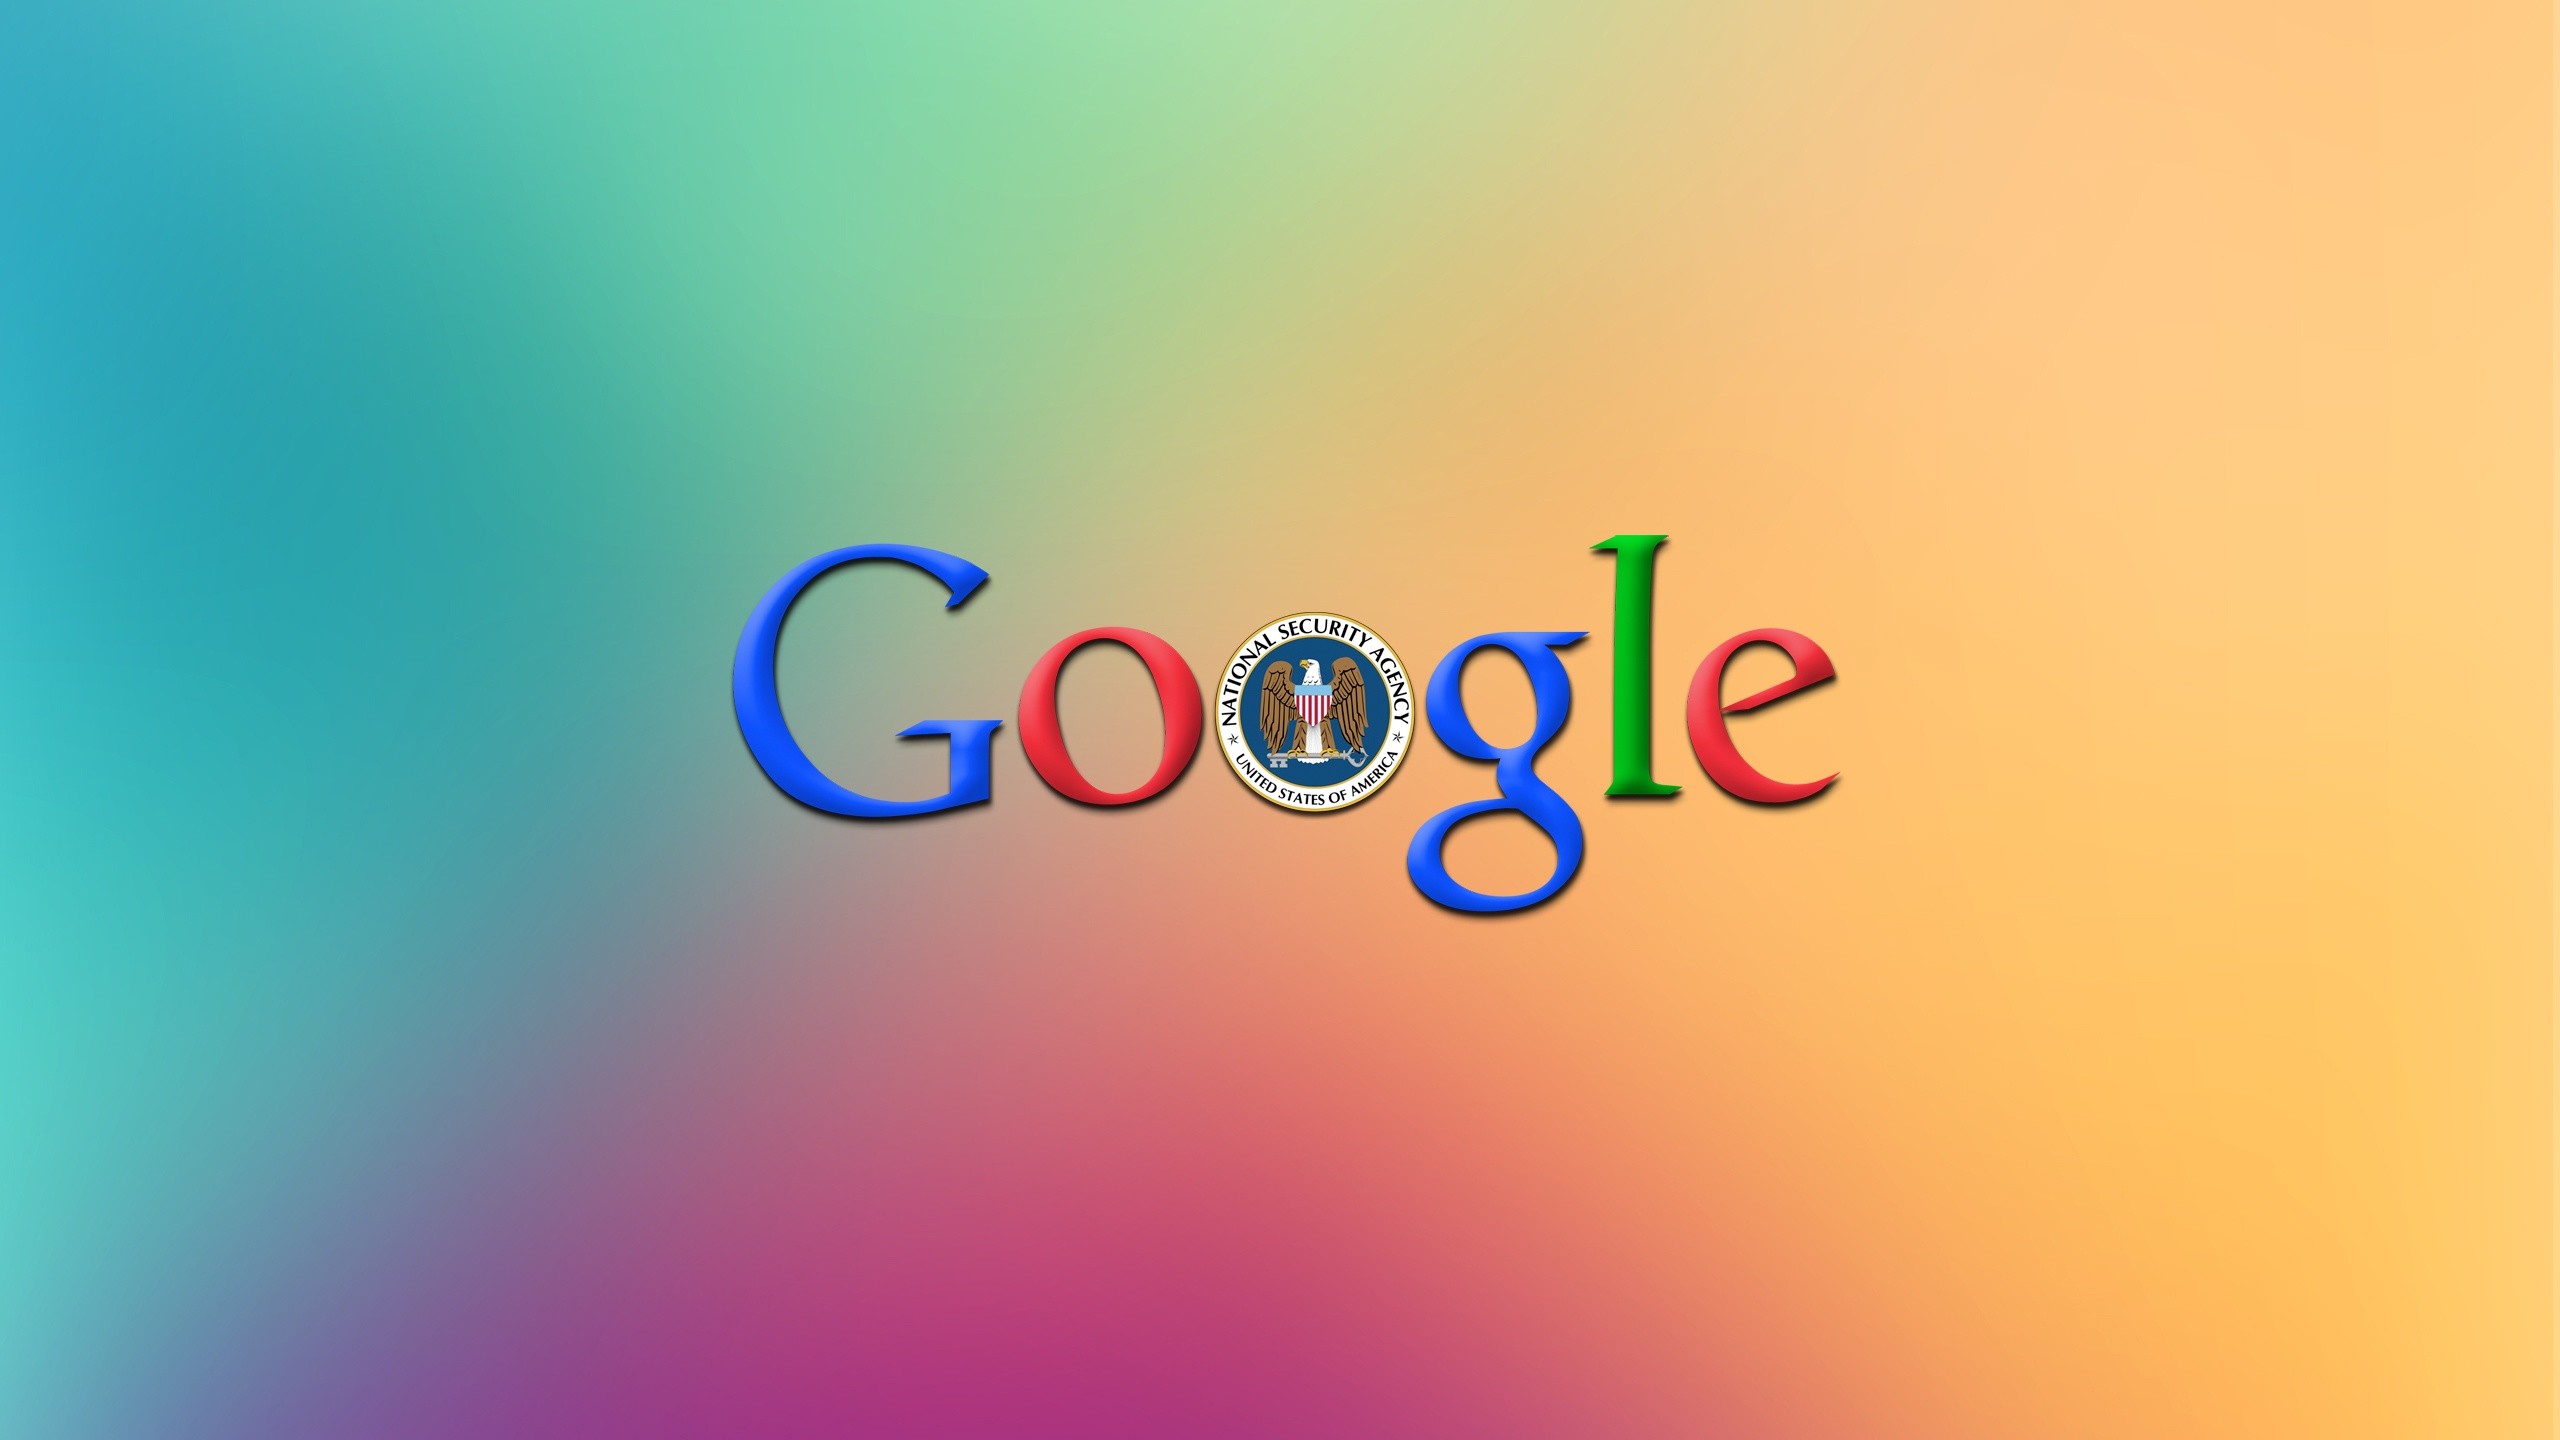 2560x1440 Google Apps For Education wallpaper